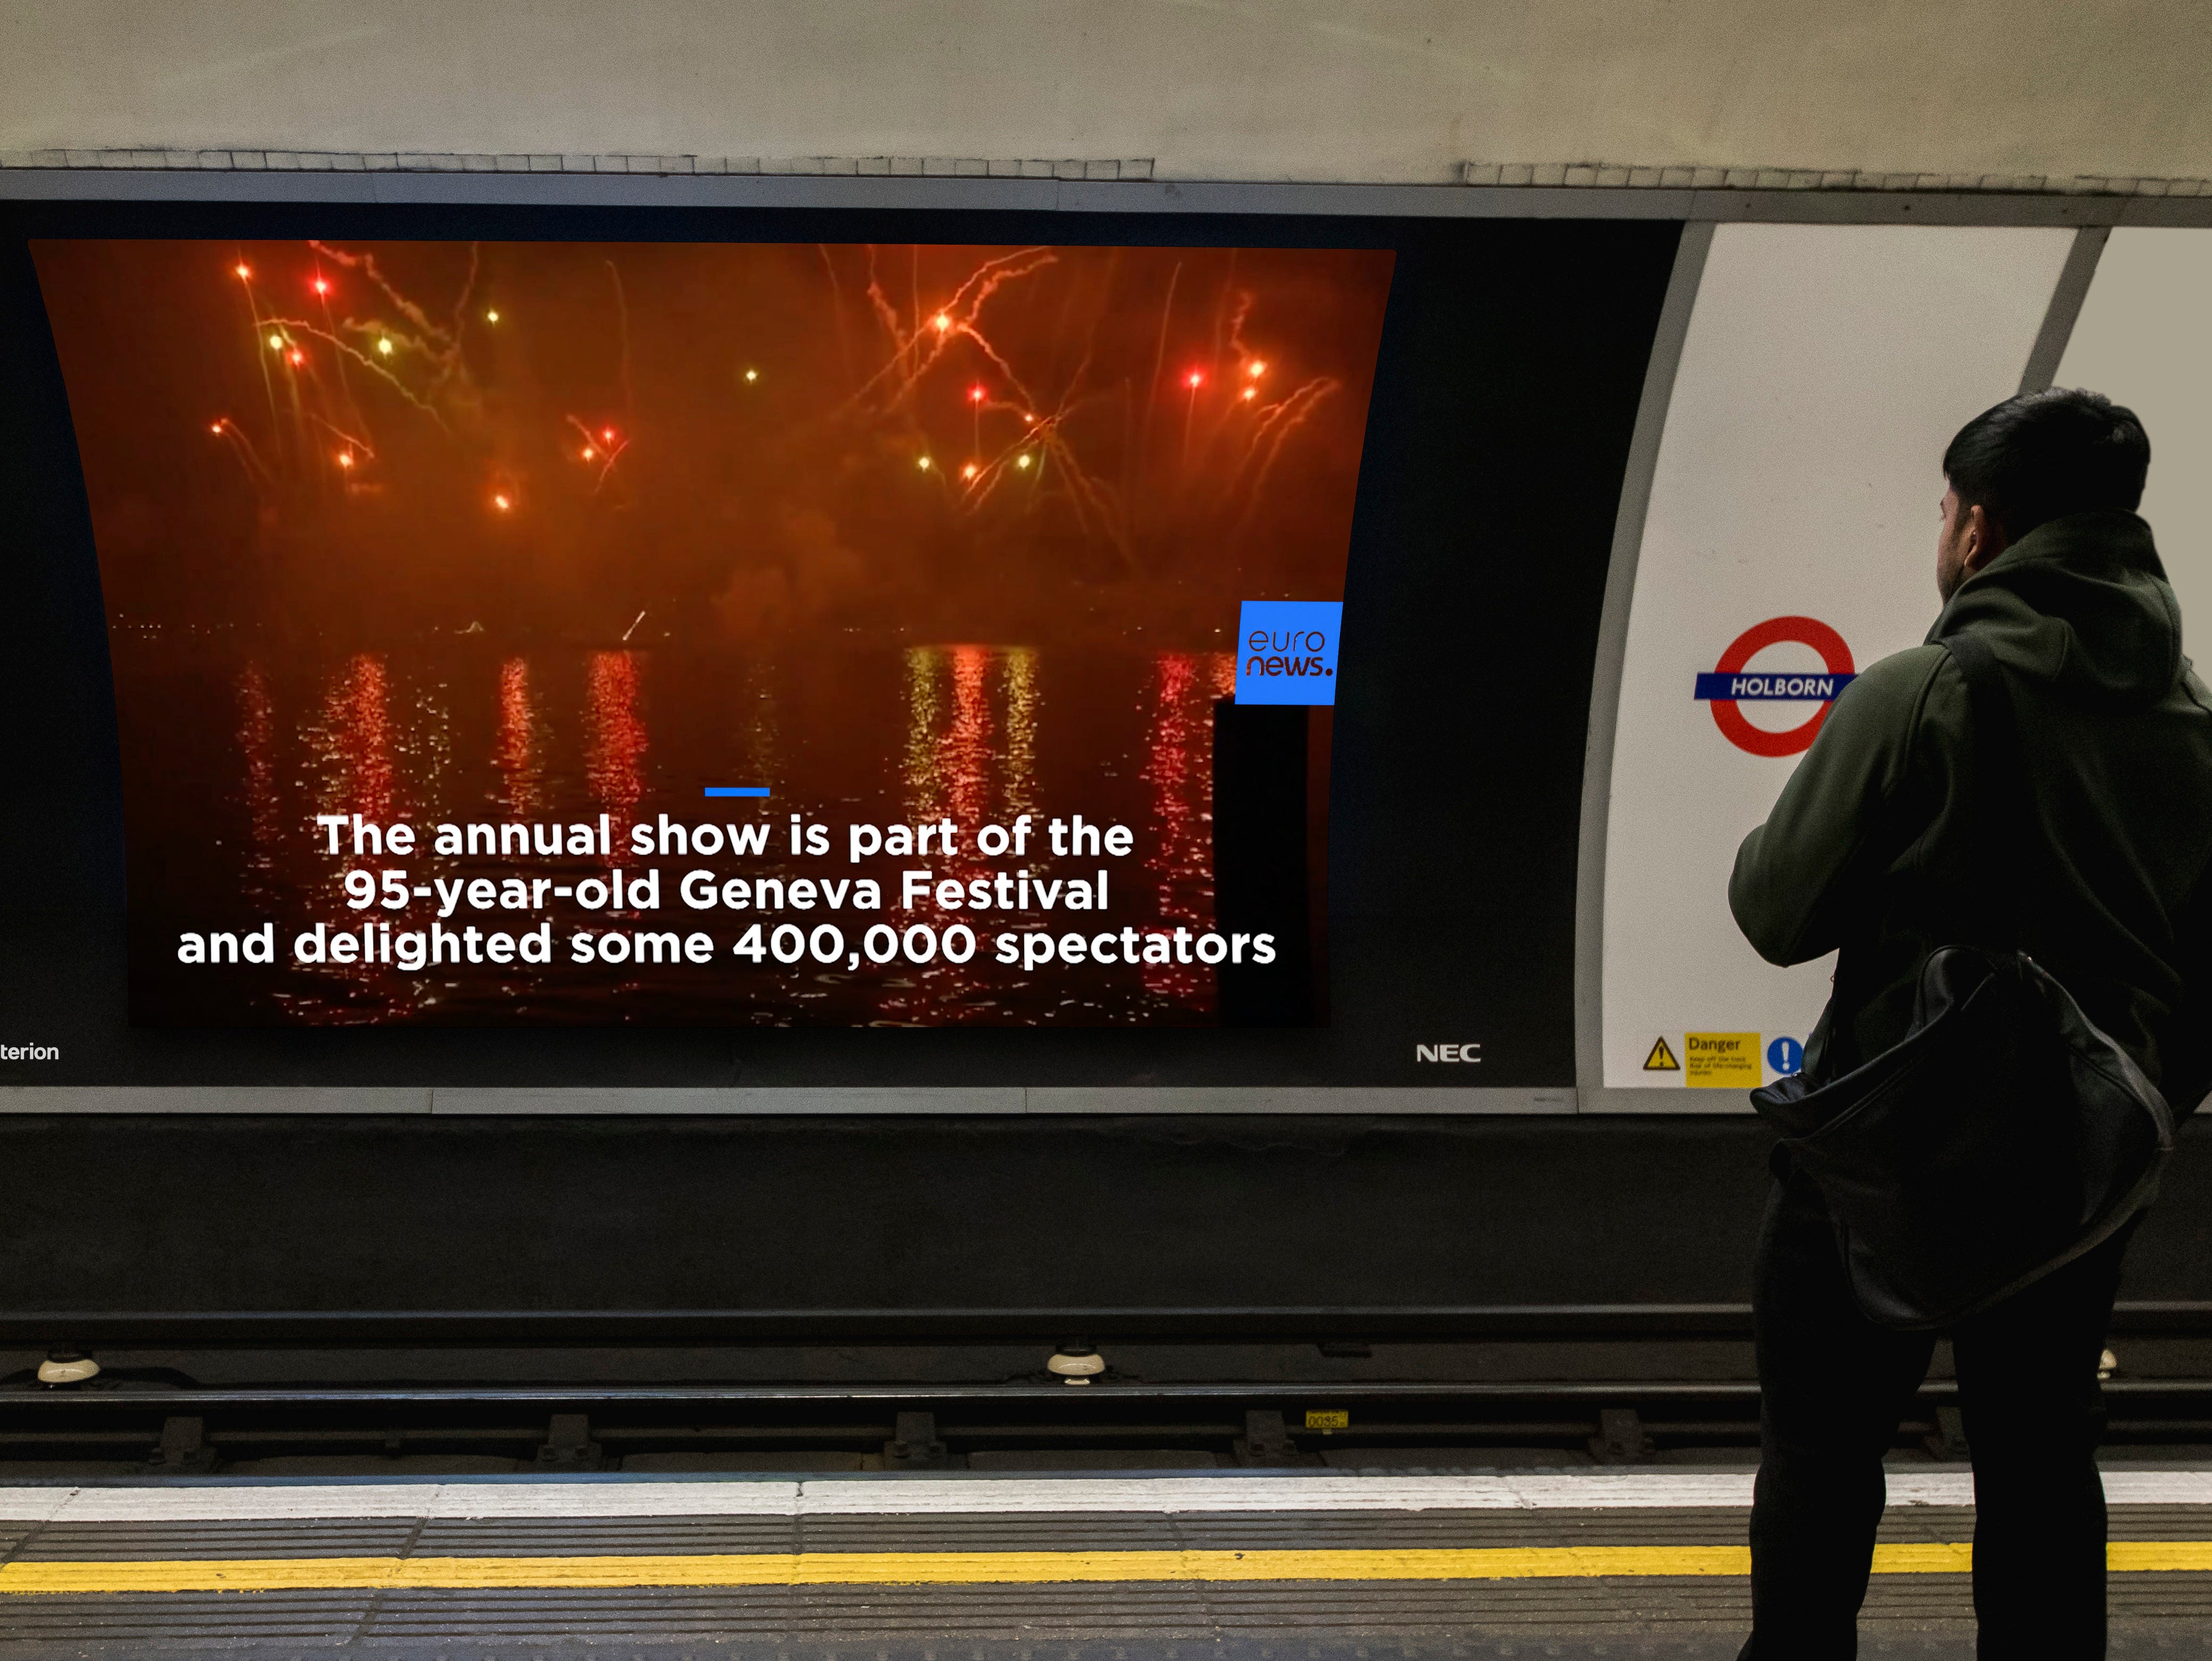 Live news to broadcast on 60 screens across 15 London Underground